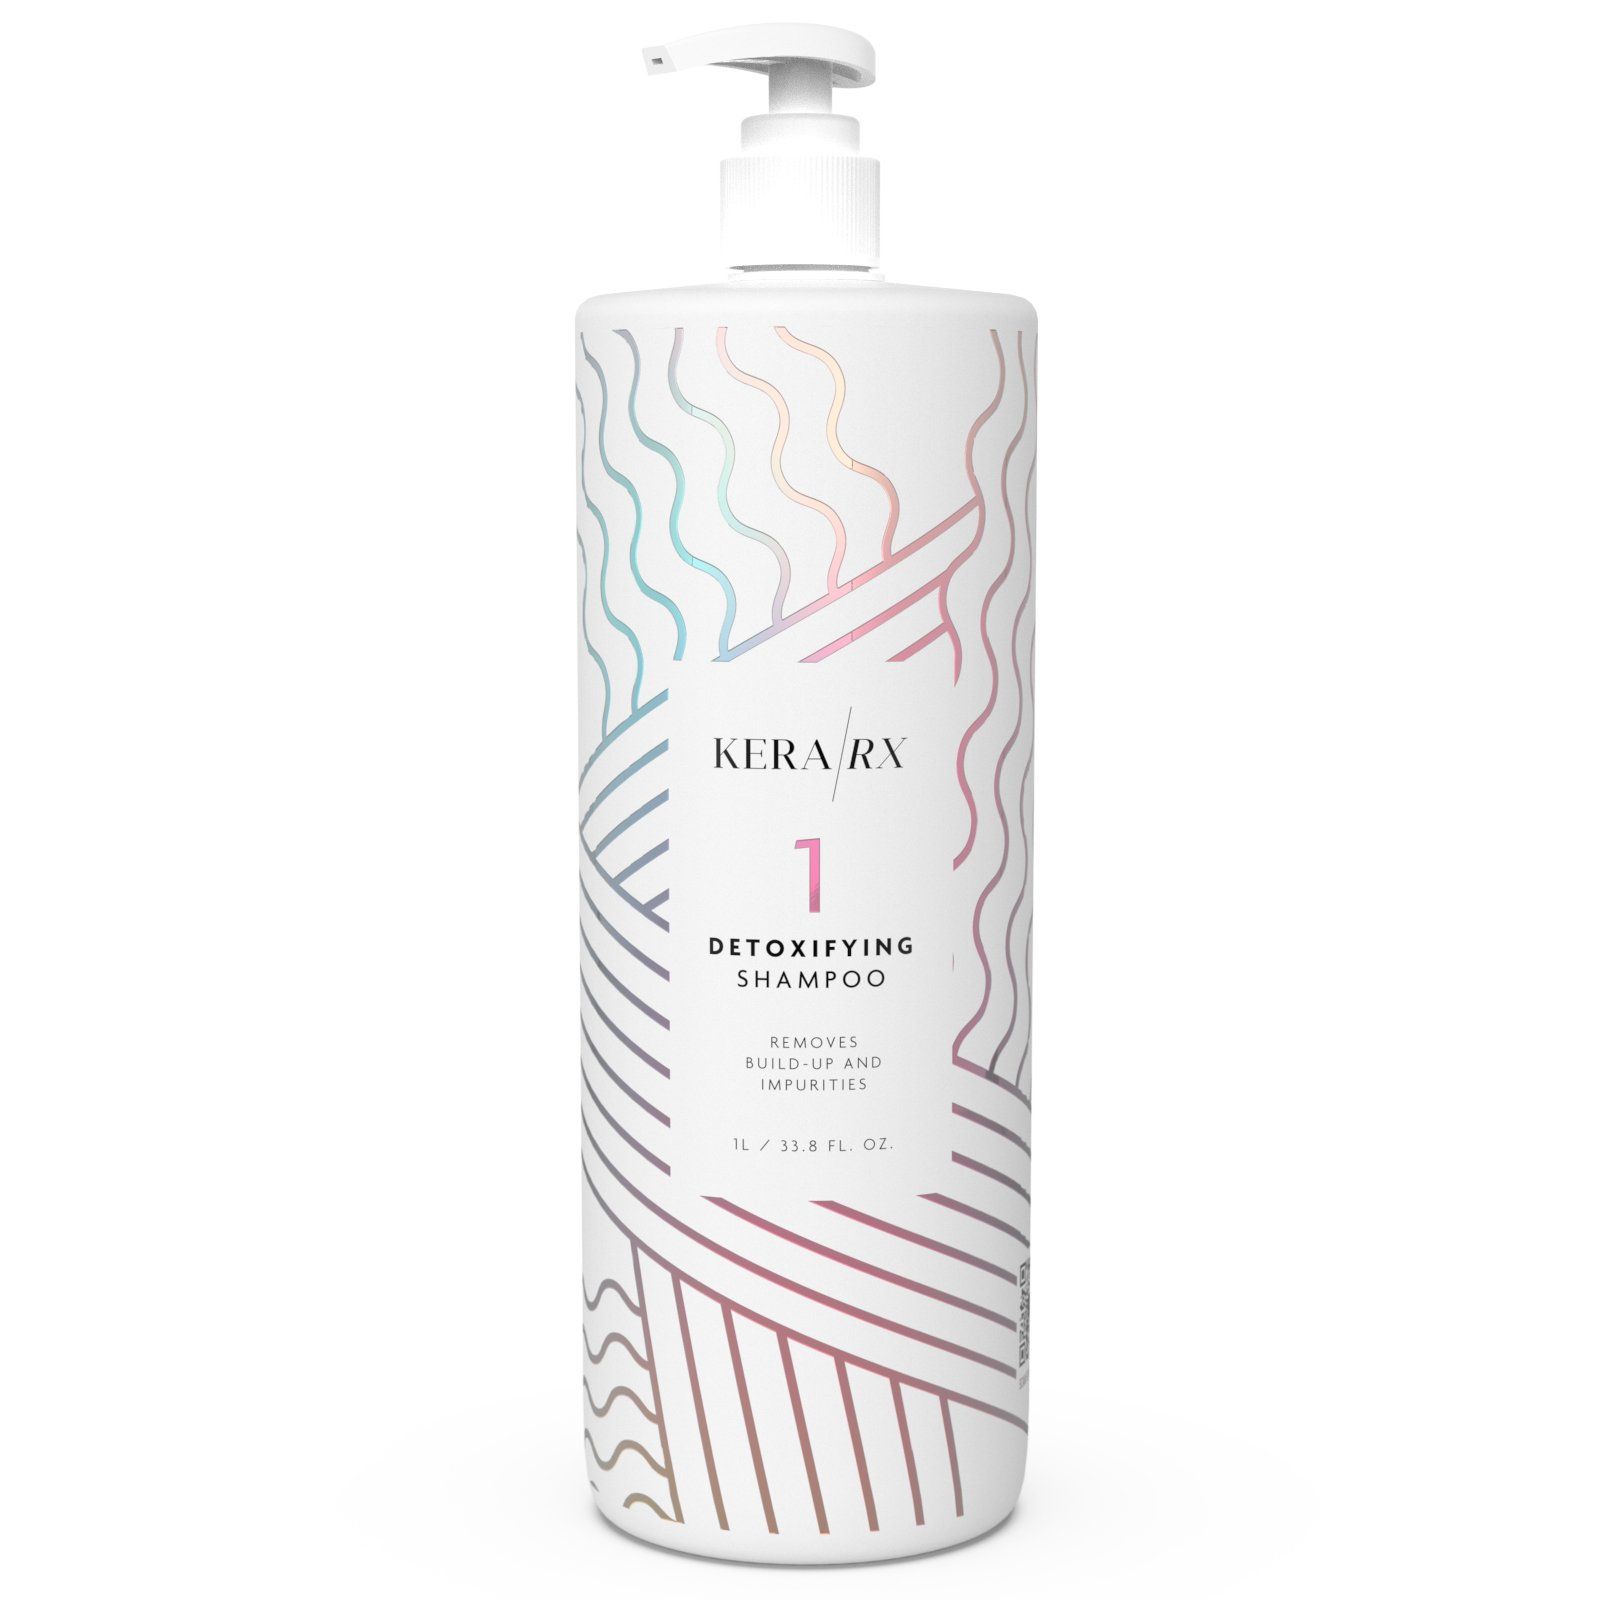 Detoxifying Shampoo | Kera/RX SHAMPOO Kera/RX 33.8 fl.oz. 